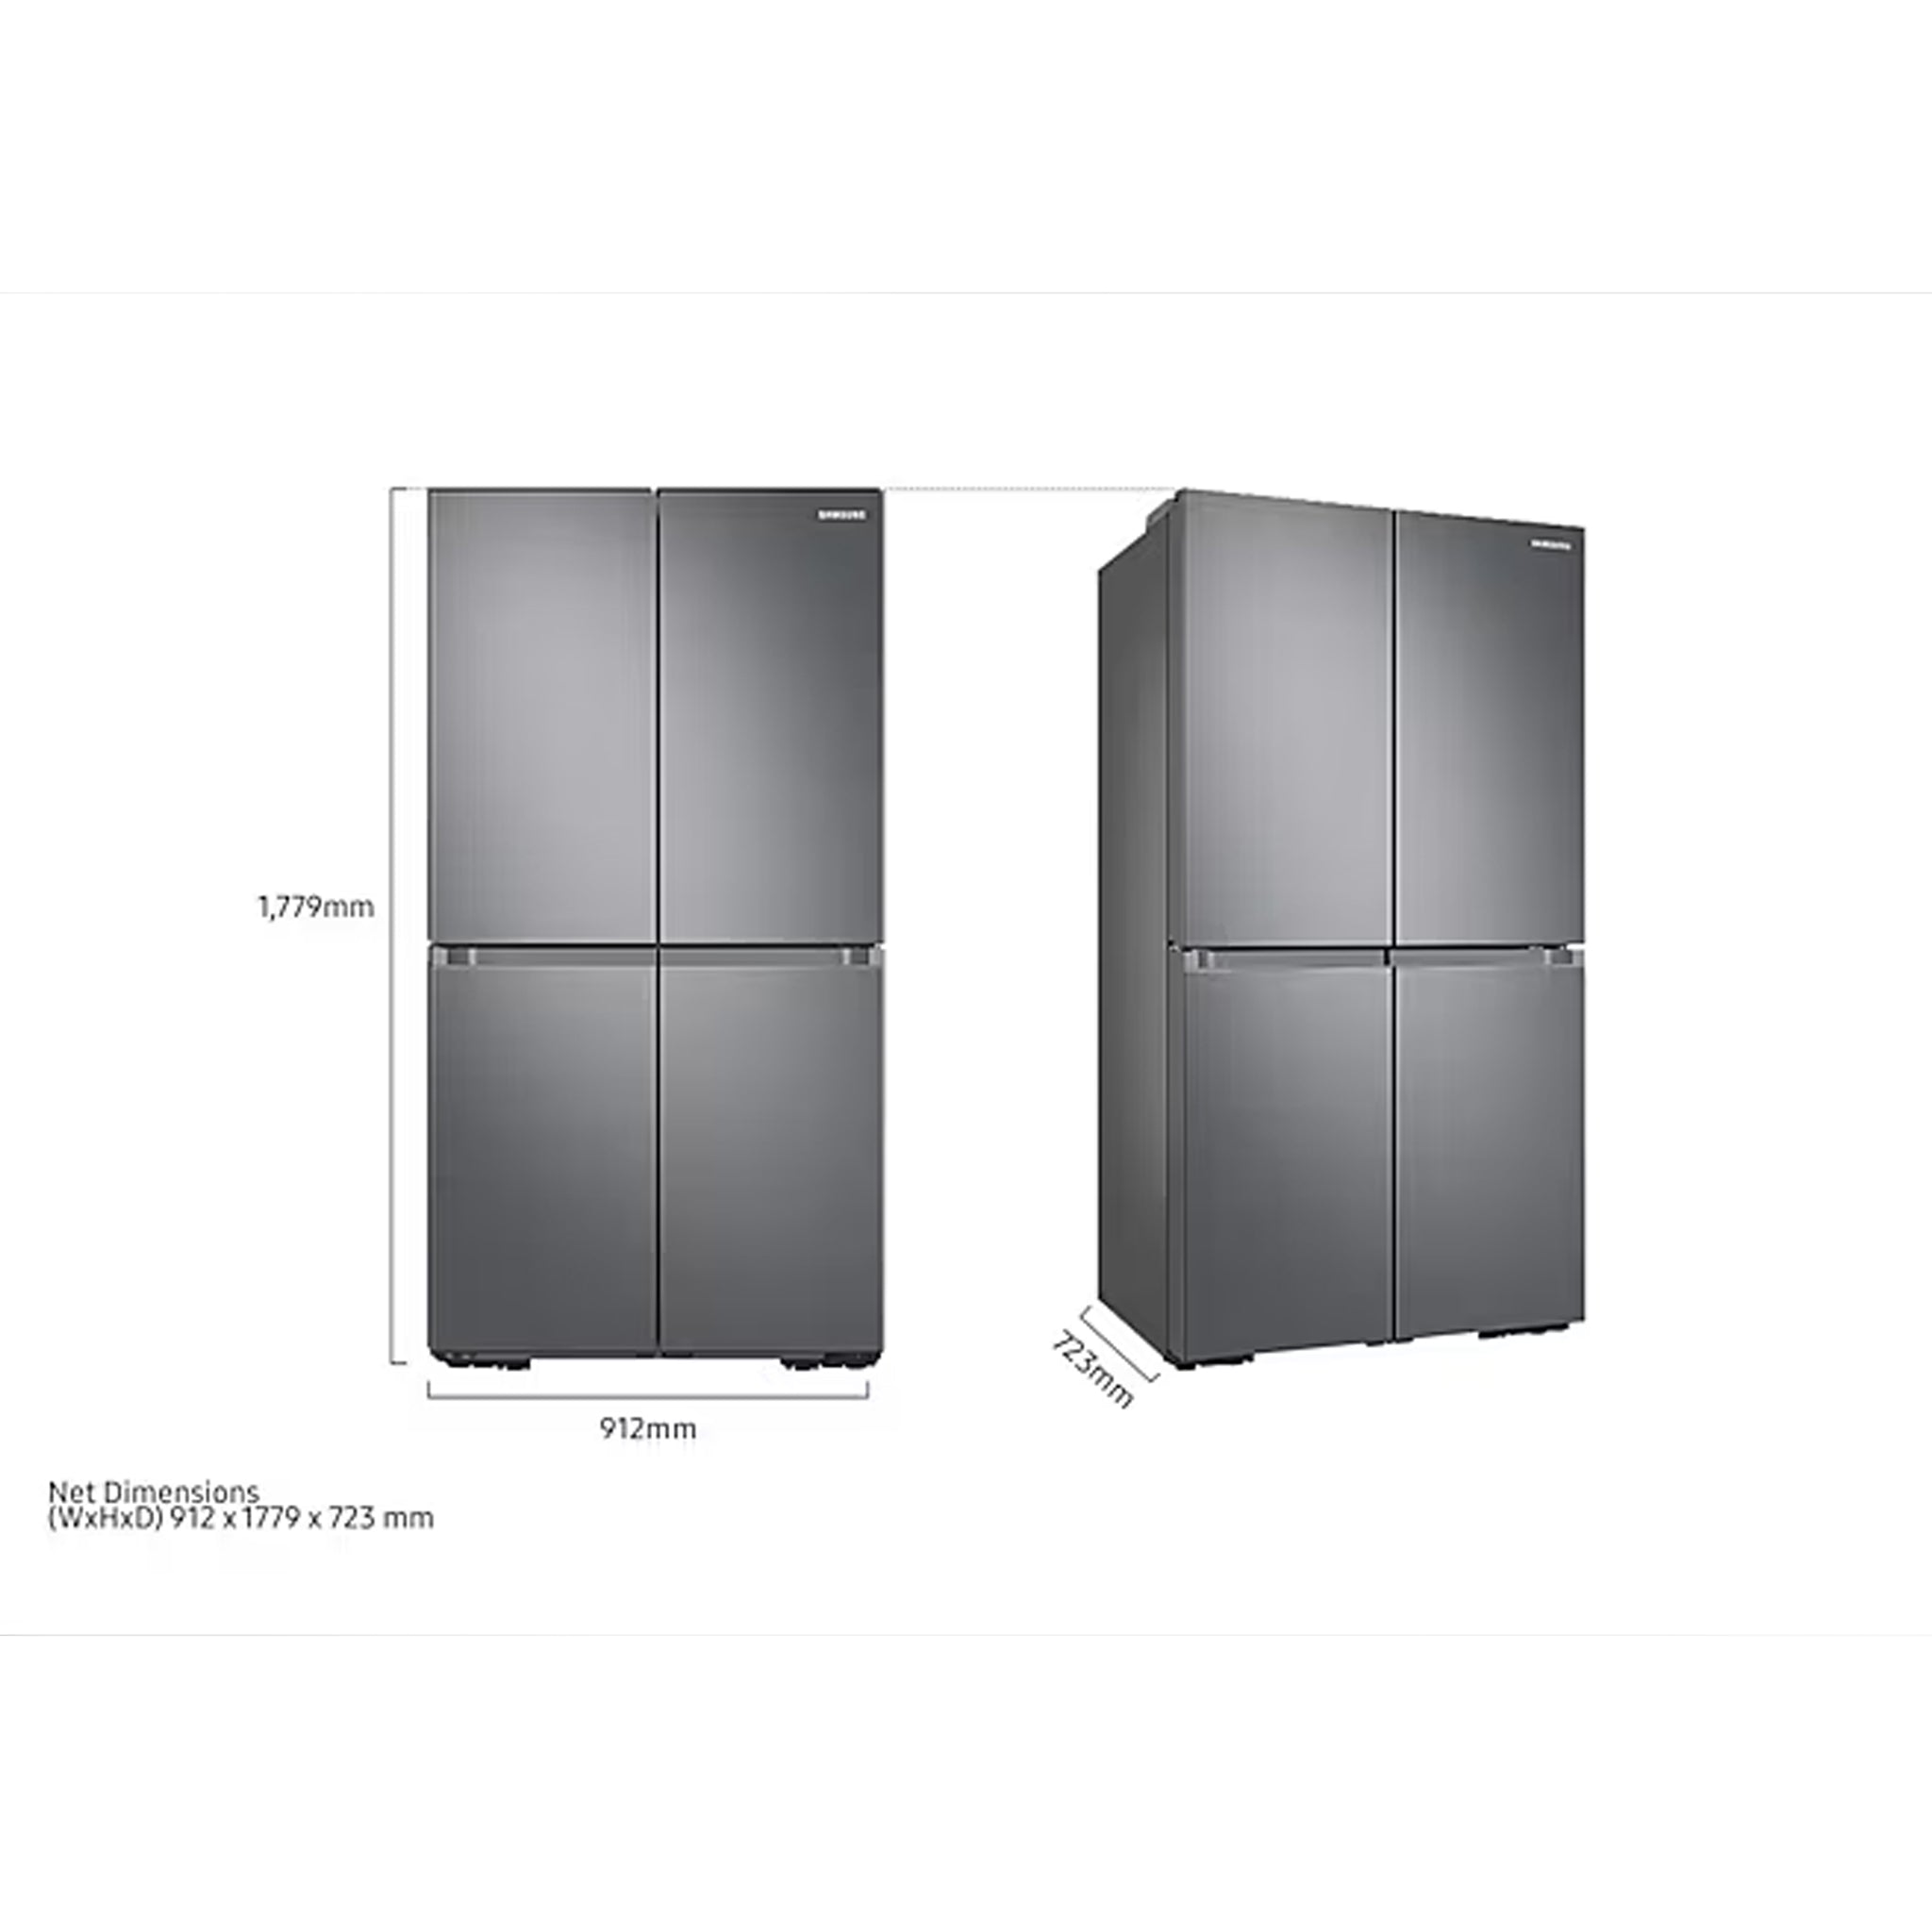 SAMSUNG RF59A70T0S9 22.0 cu.ft. French Door Refrigerator Samsung